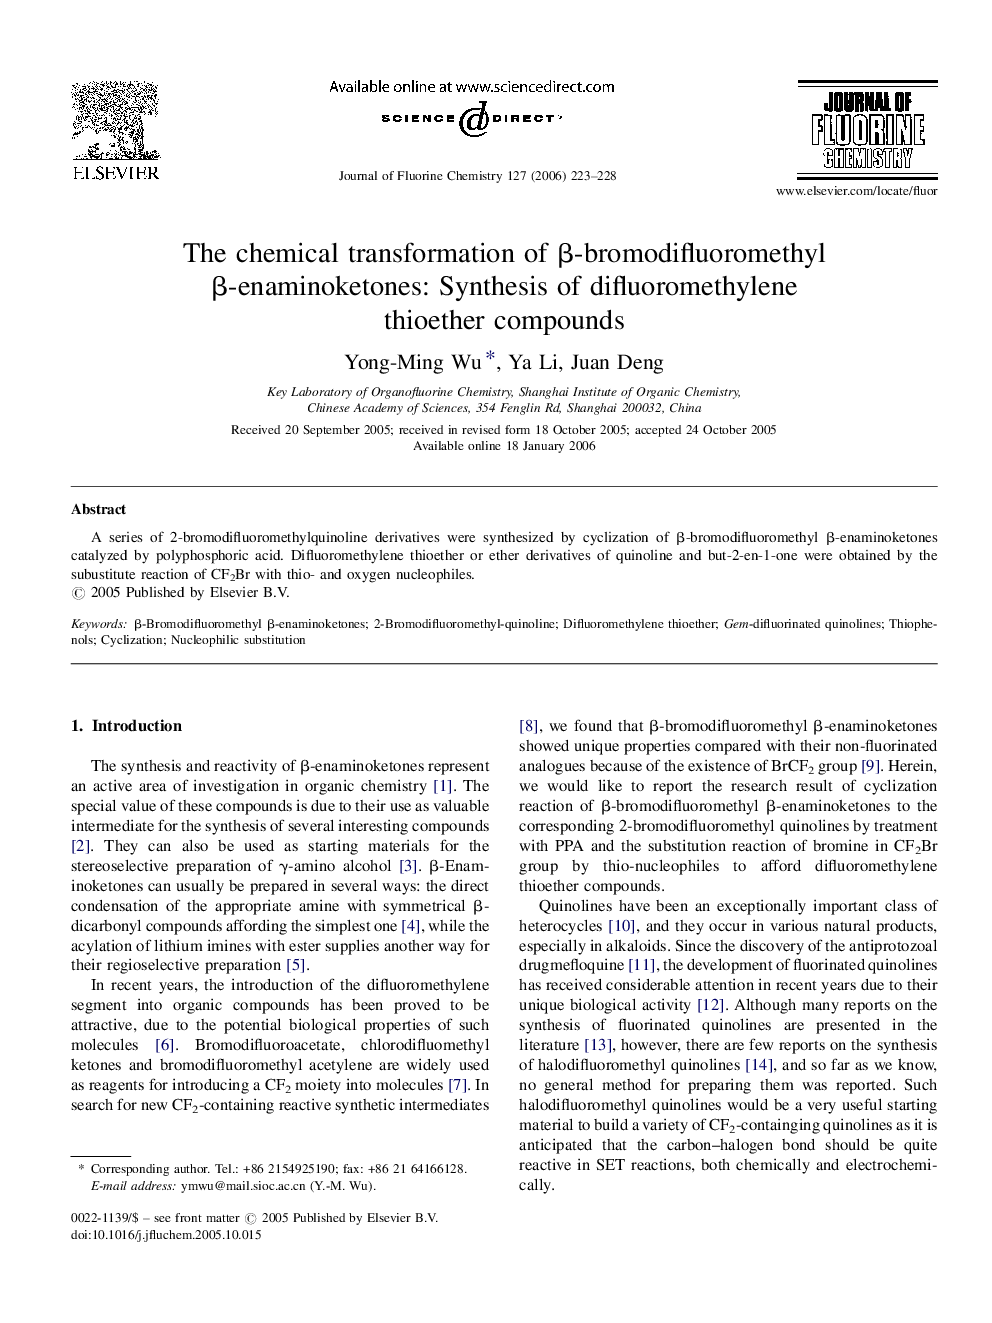 The chemical transformation of β-bromodifluoromethyl β-enaminoketones: Synthesis of difluoromethylene thioether compounds